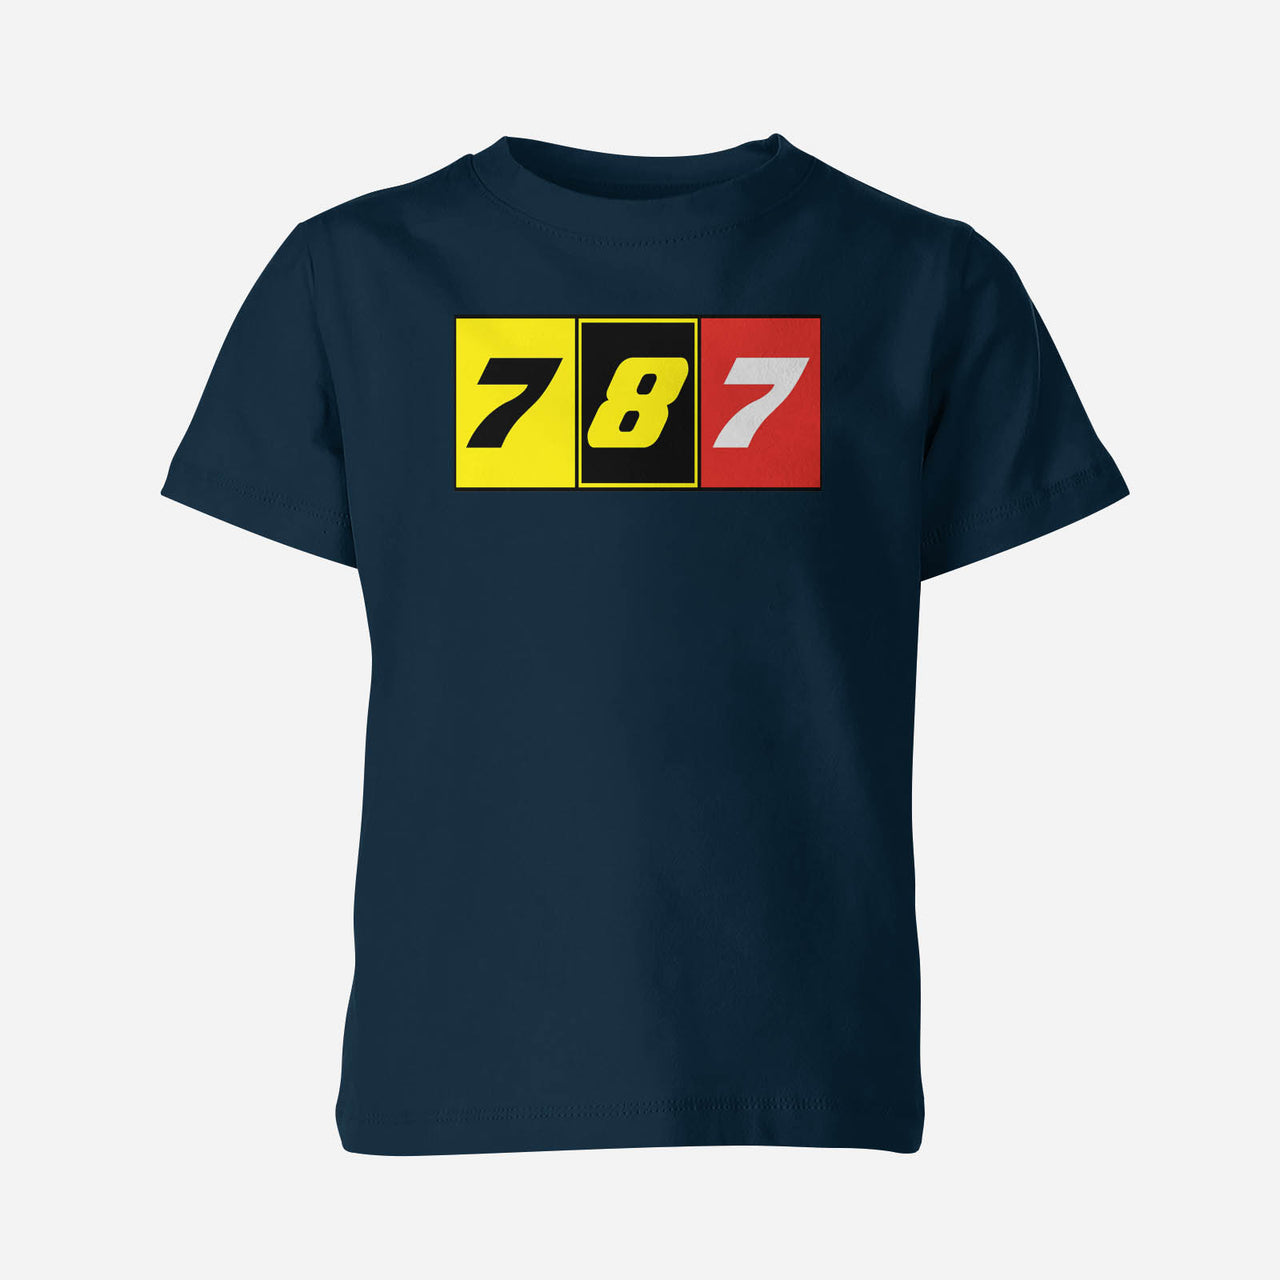 Flat Colourful 787 Designed Children T-Shirts